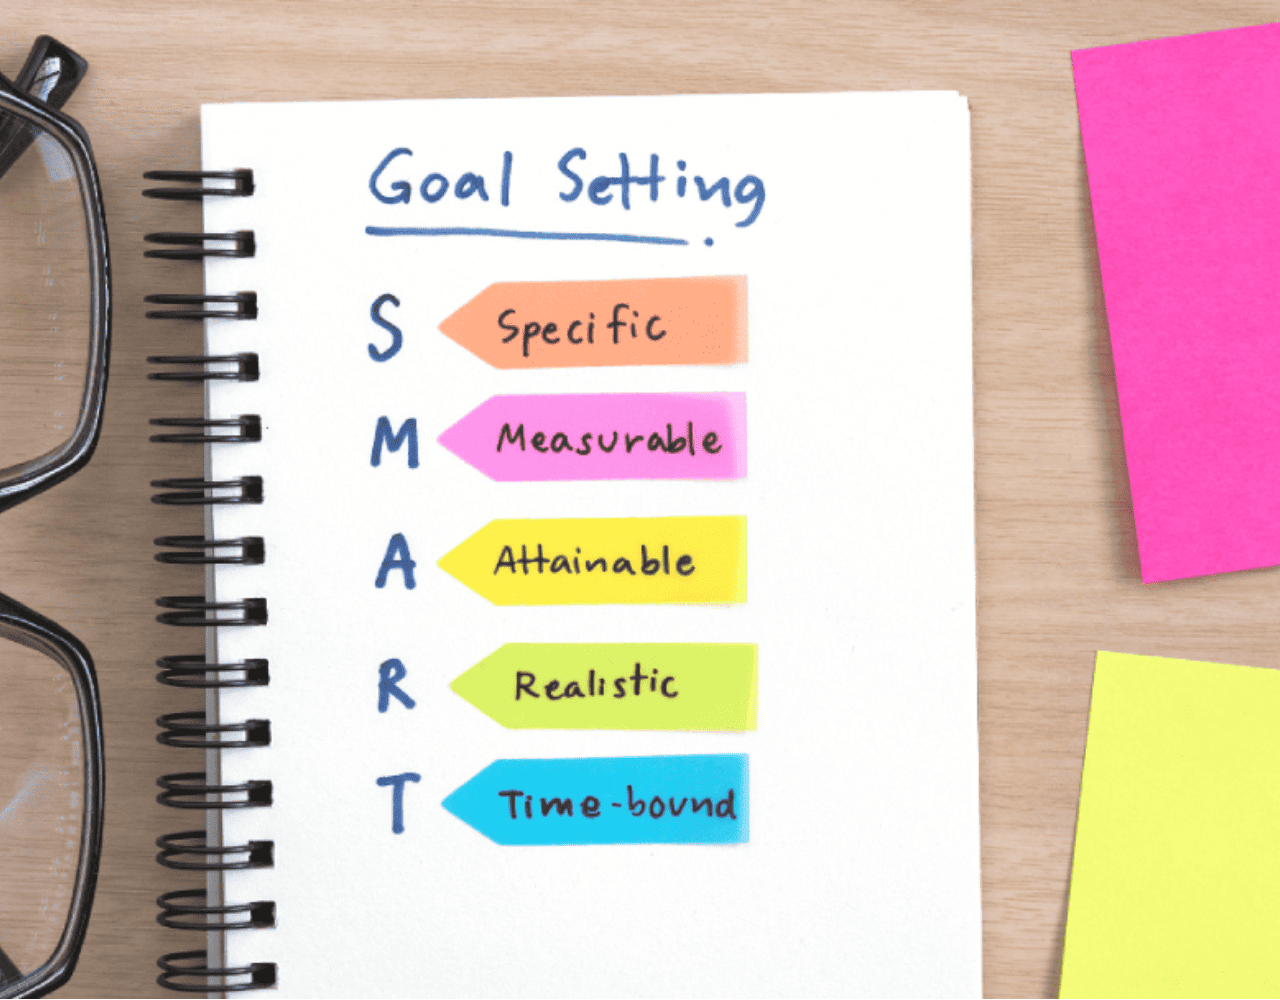 A SMART goal setting worksheet for high school students.